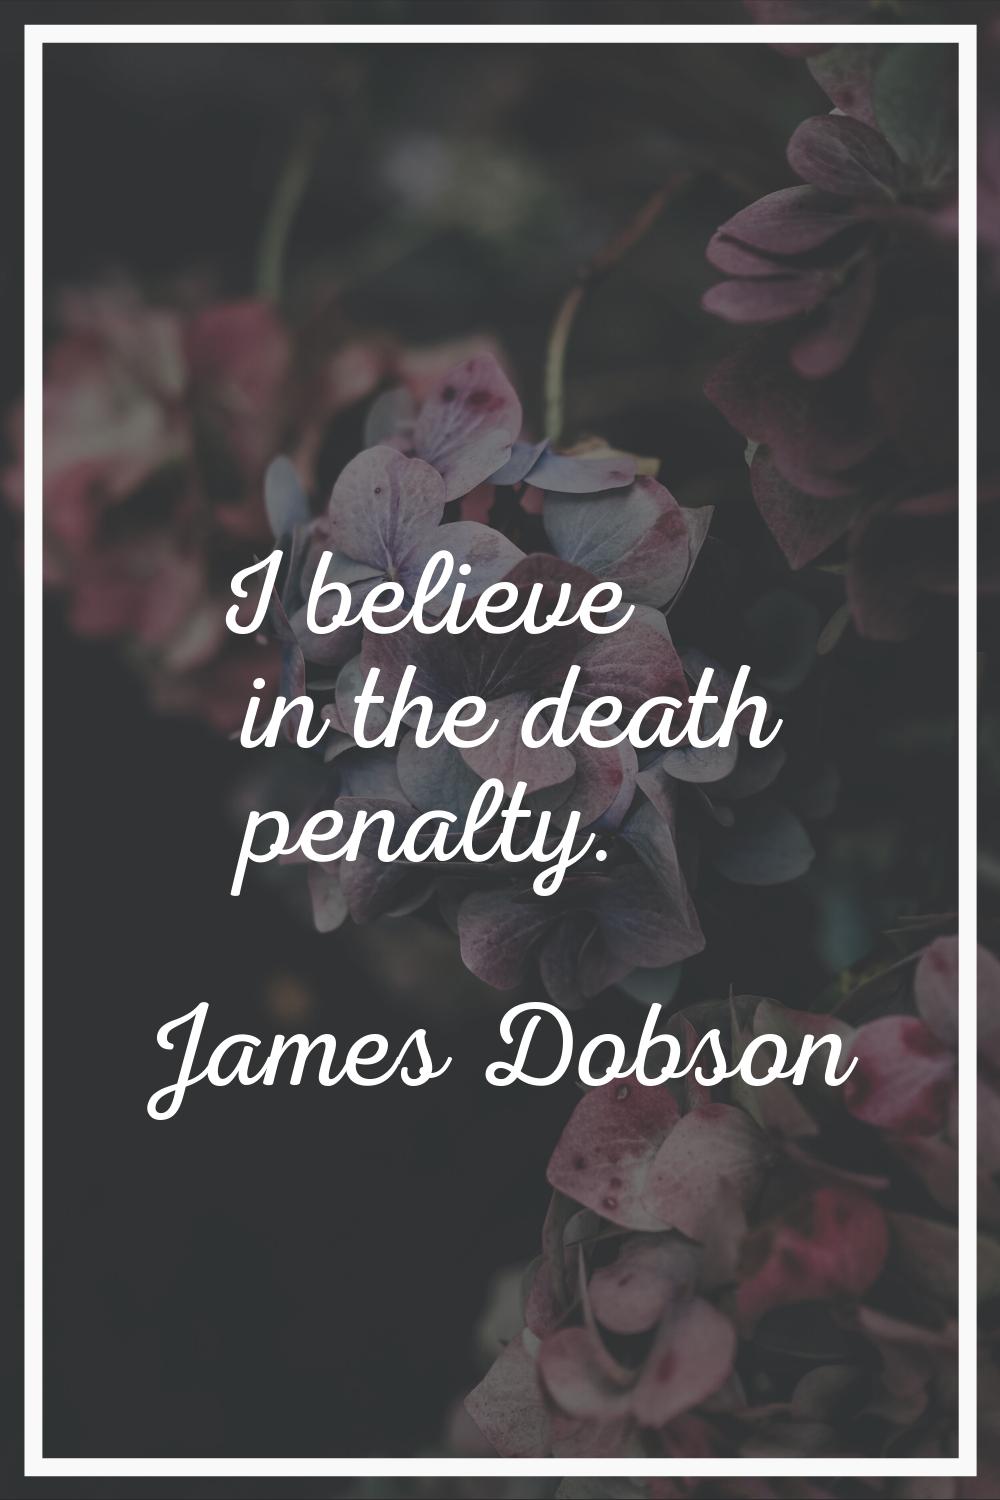 I believe in the death penalty.